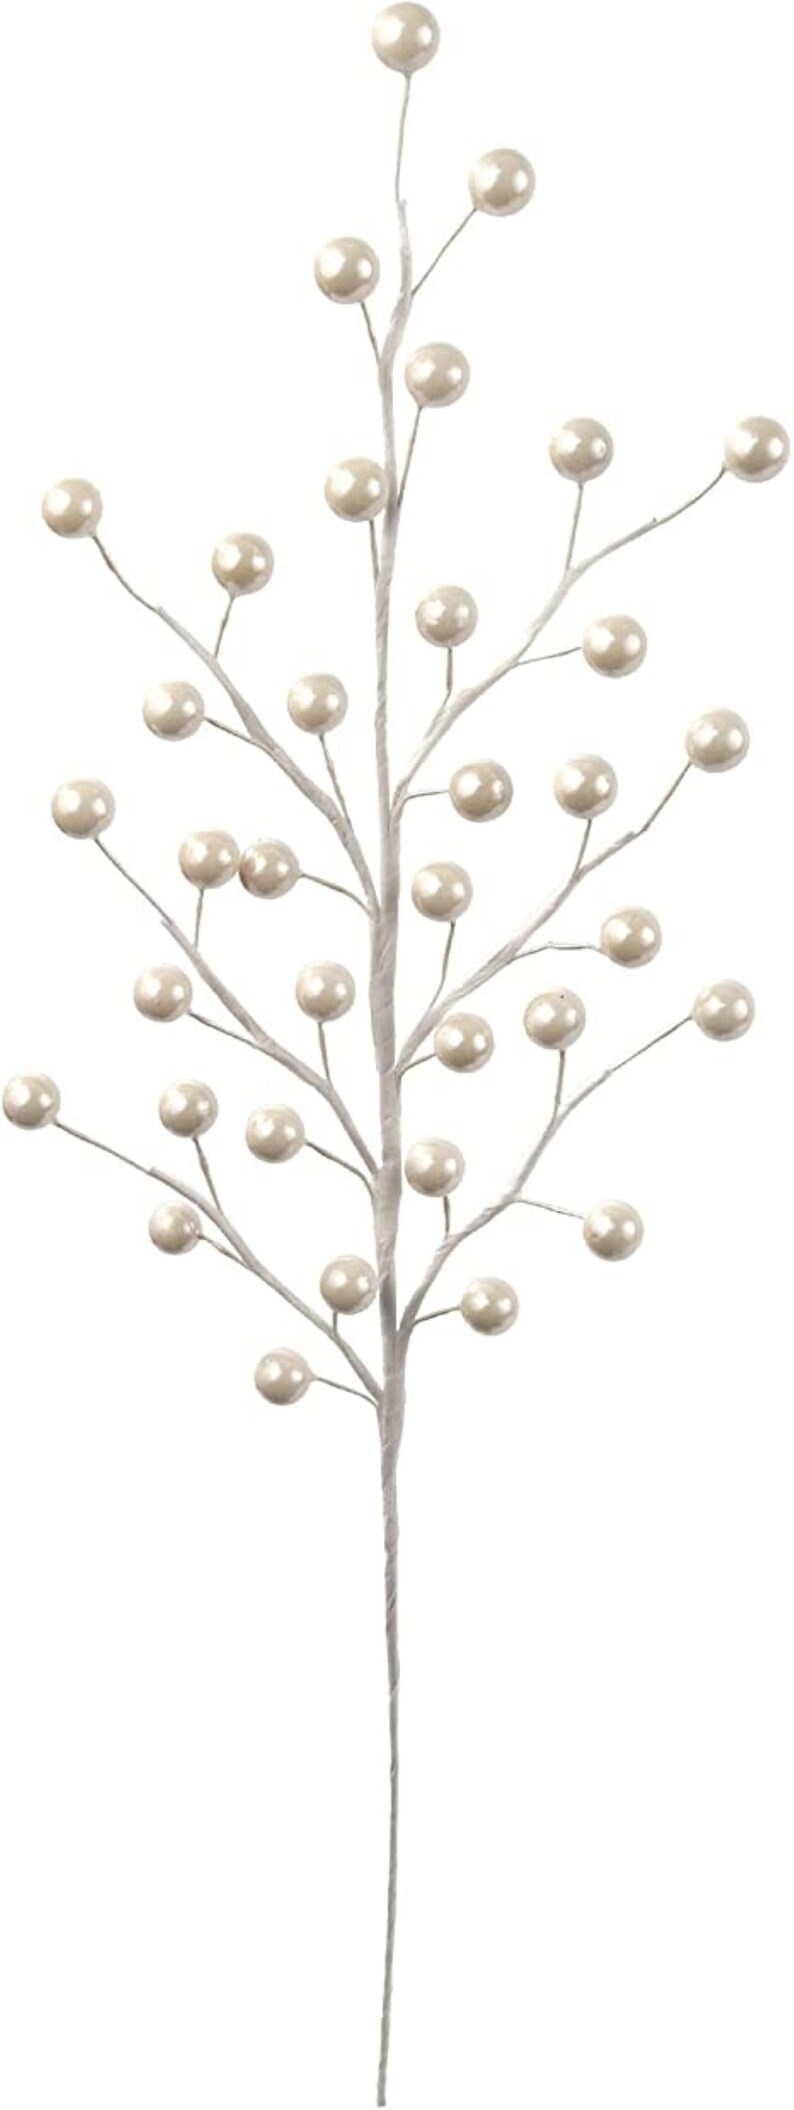 19 Silver Holly Berry Picks - Decorative Branch Sprays, 12-Pack 